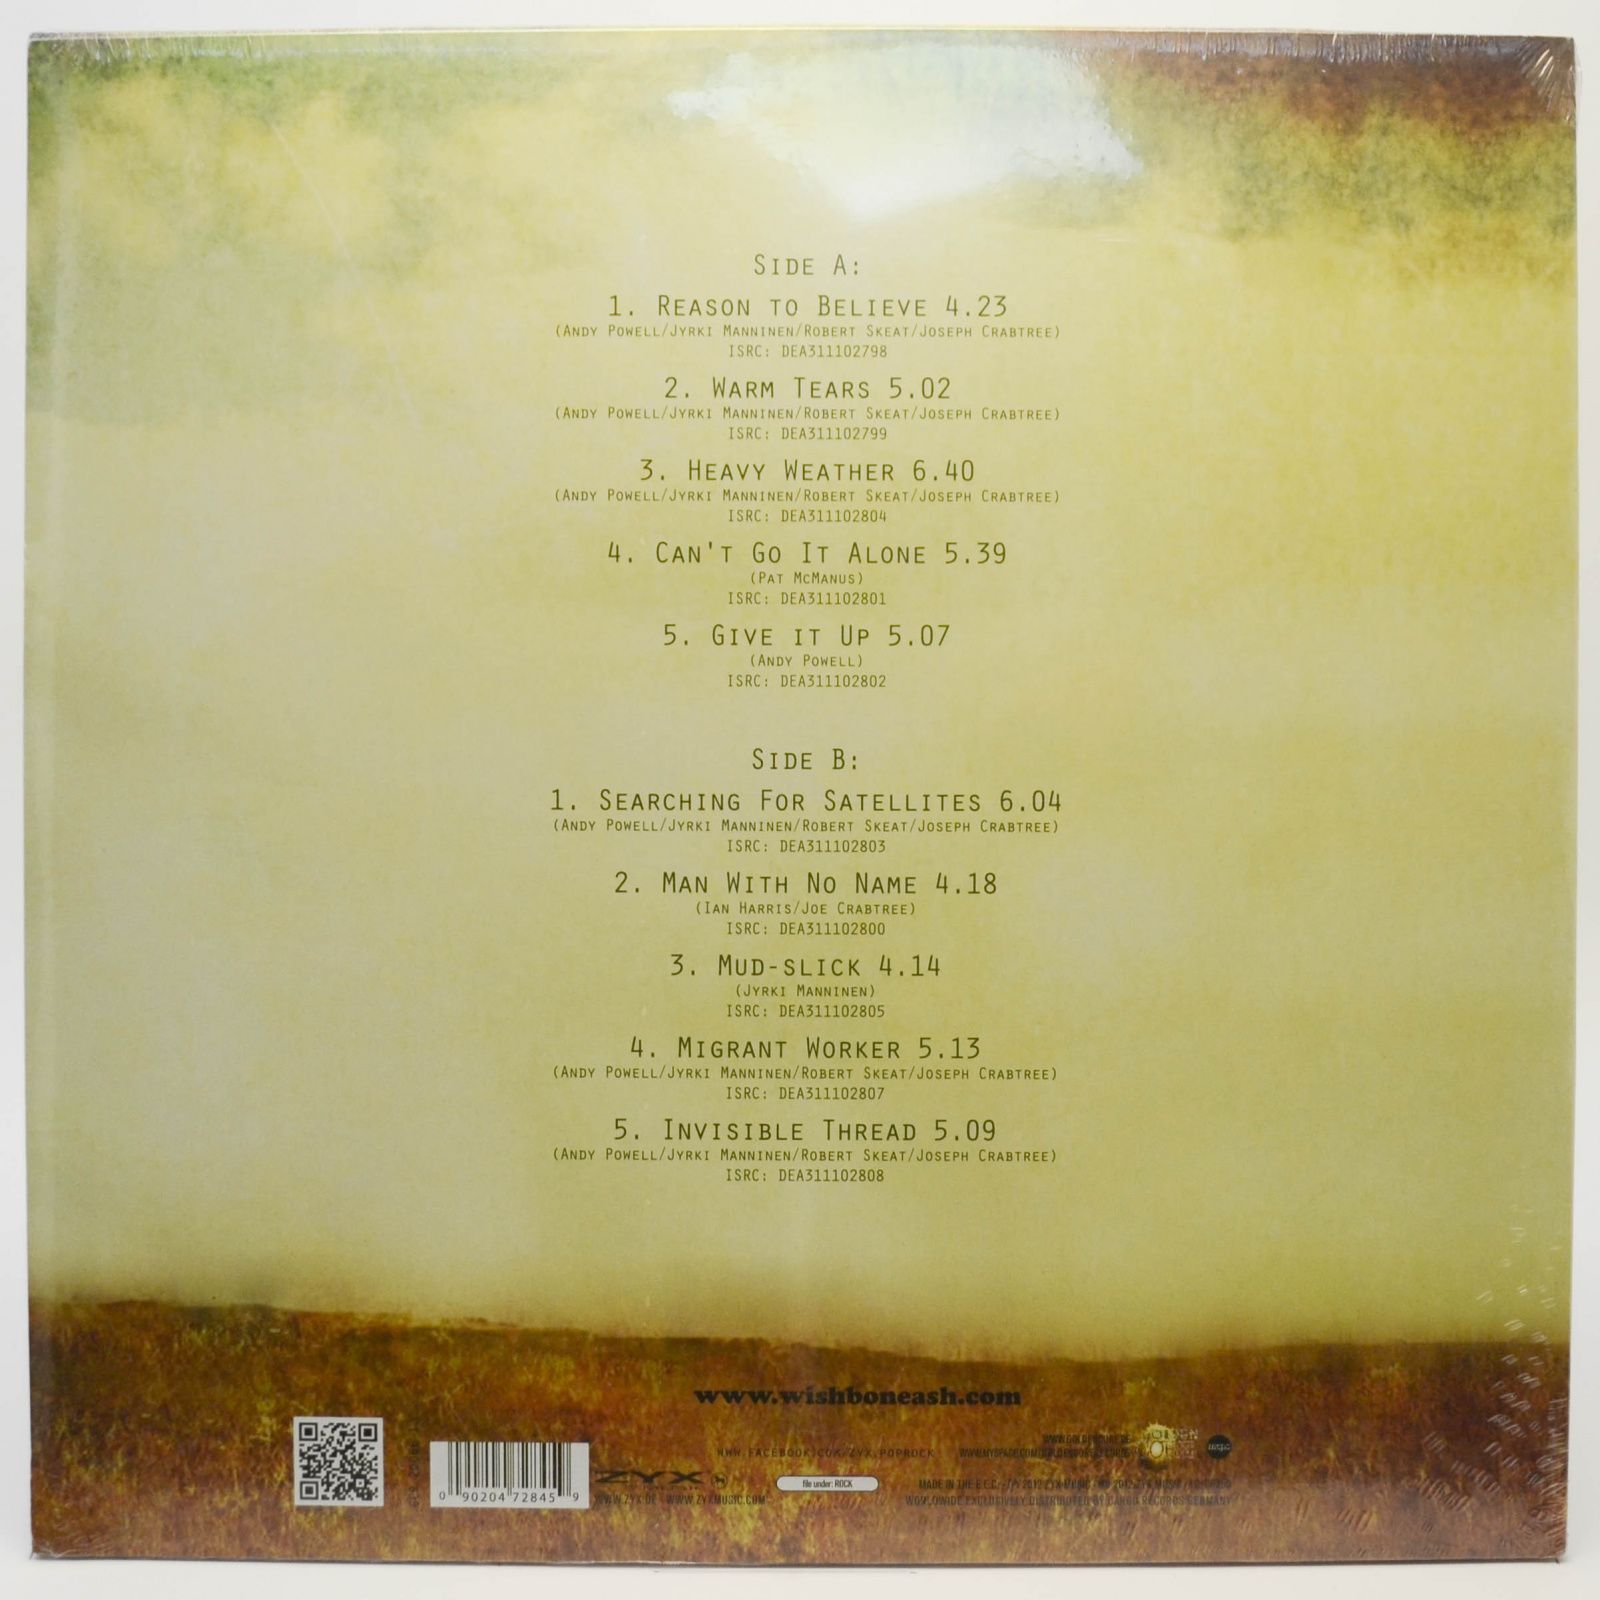 Wishbone Ash — Elegant Stealth, 2012